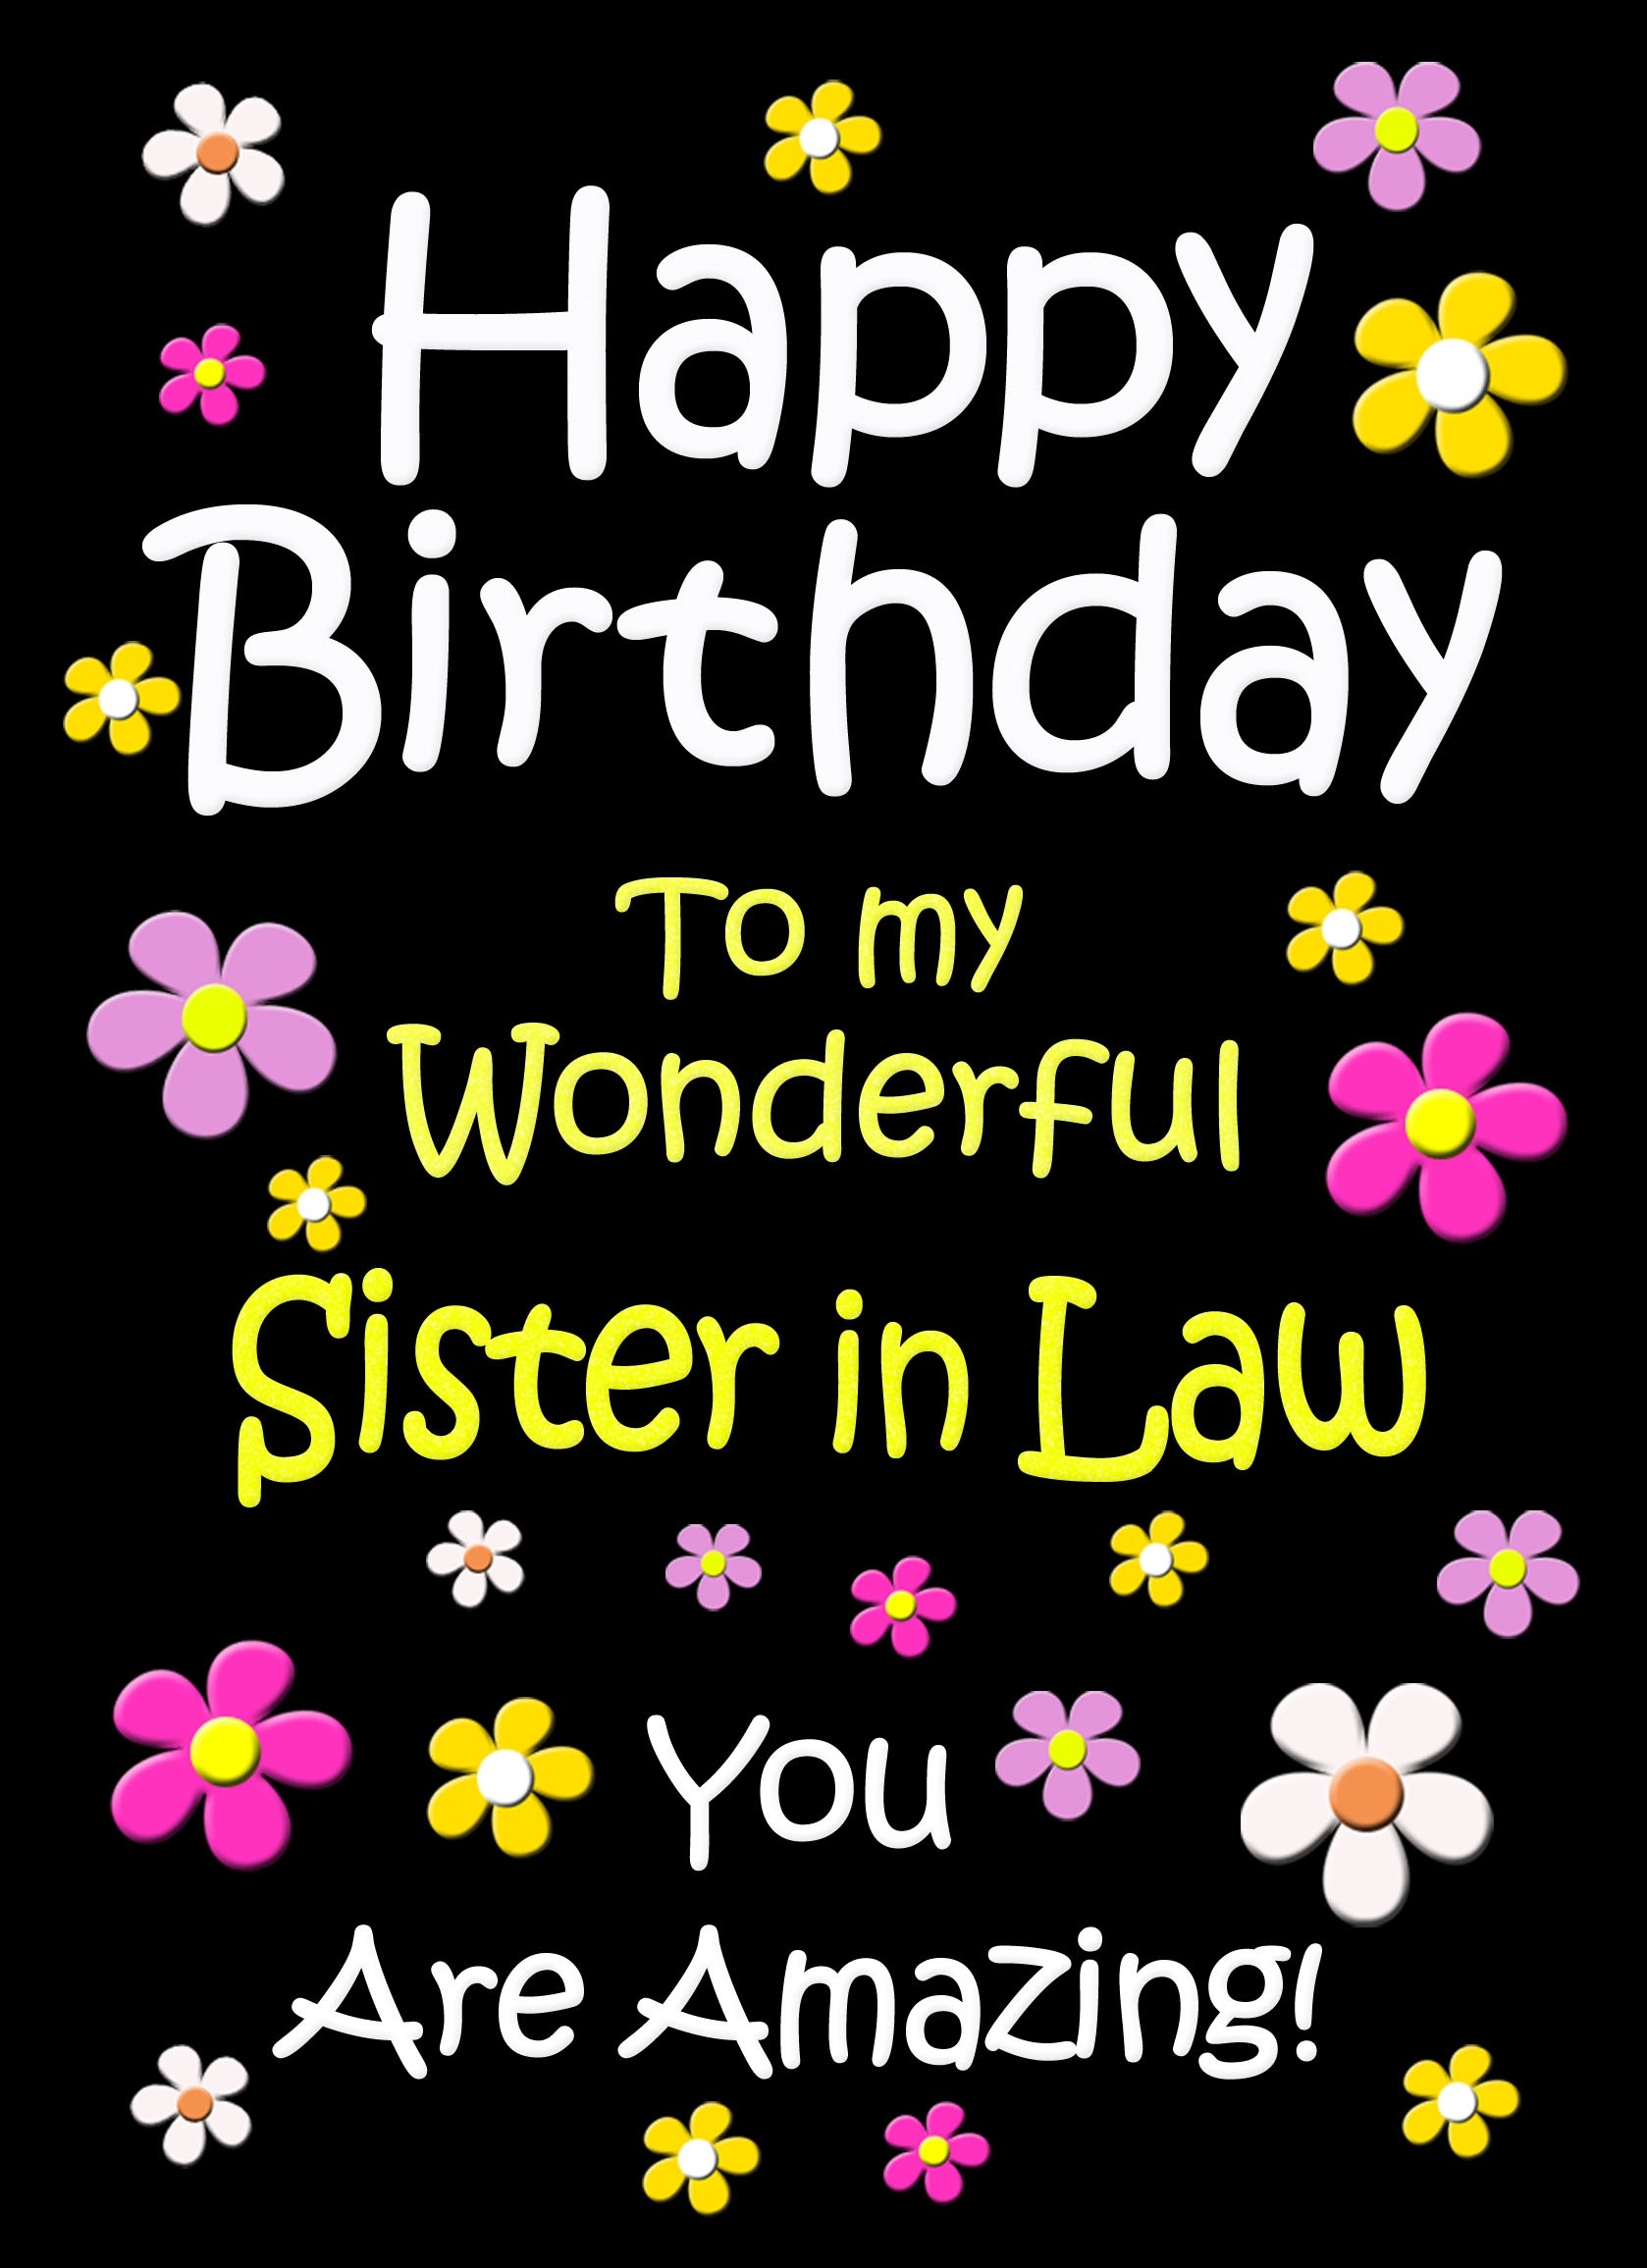 Sister in Law Birthday Card (Black)